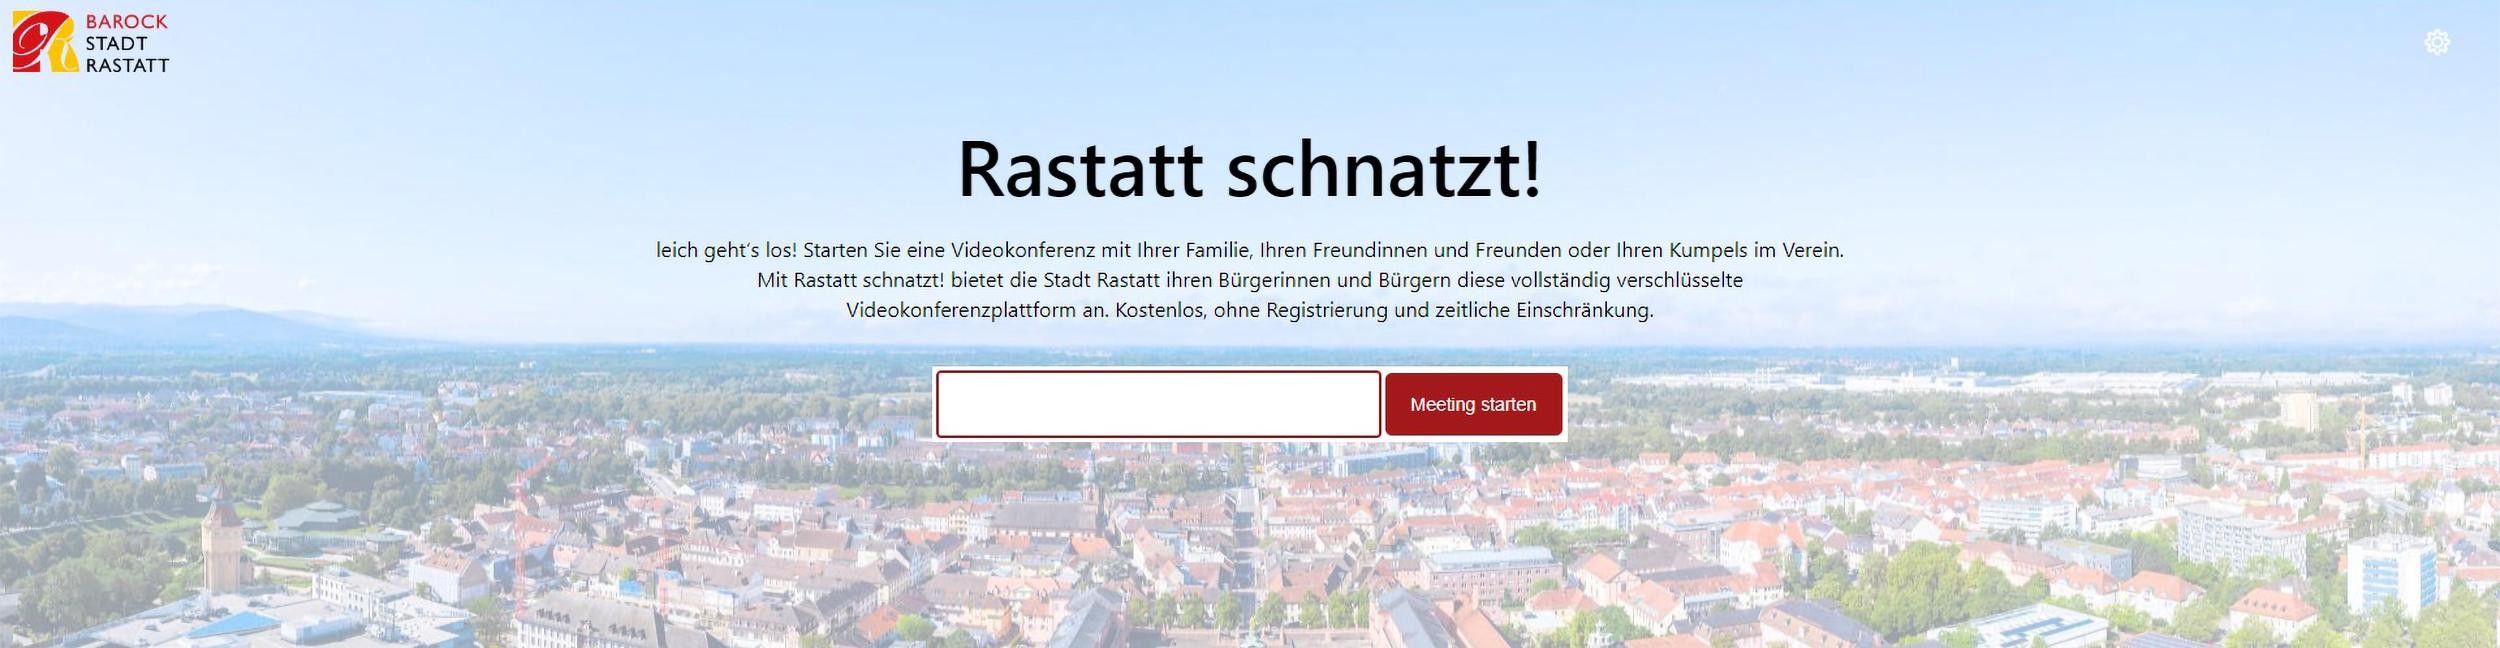 Screenshot Videokonferenzplattform Rastatt schnatzt